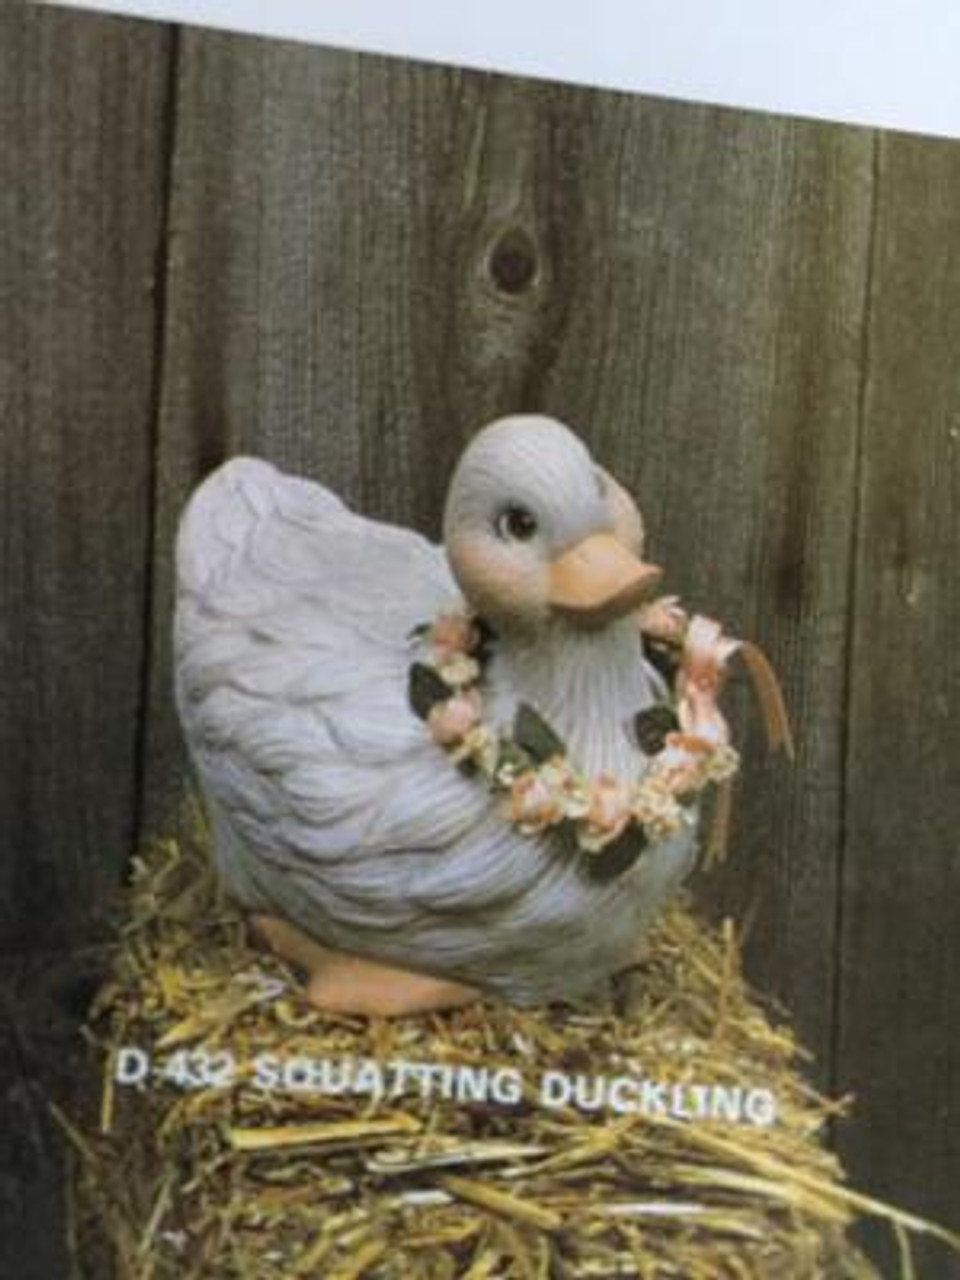 Dona's 432 Squatting Duckling, 6.5"H